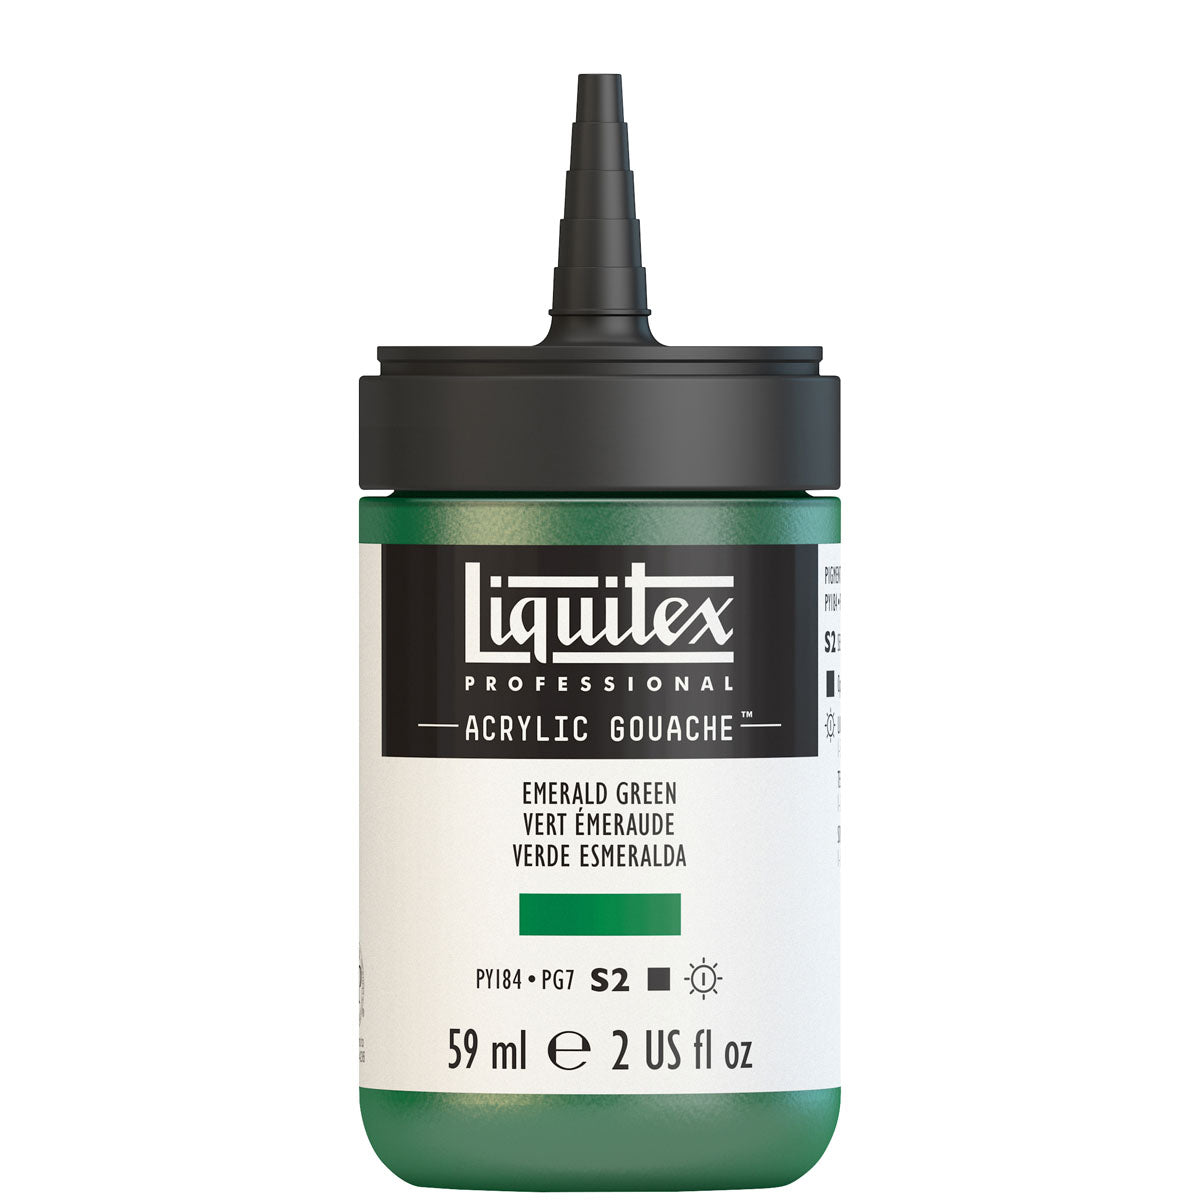 Liquitex - Acrylic Gouache 59ml S2 - Emerald Green